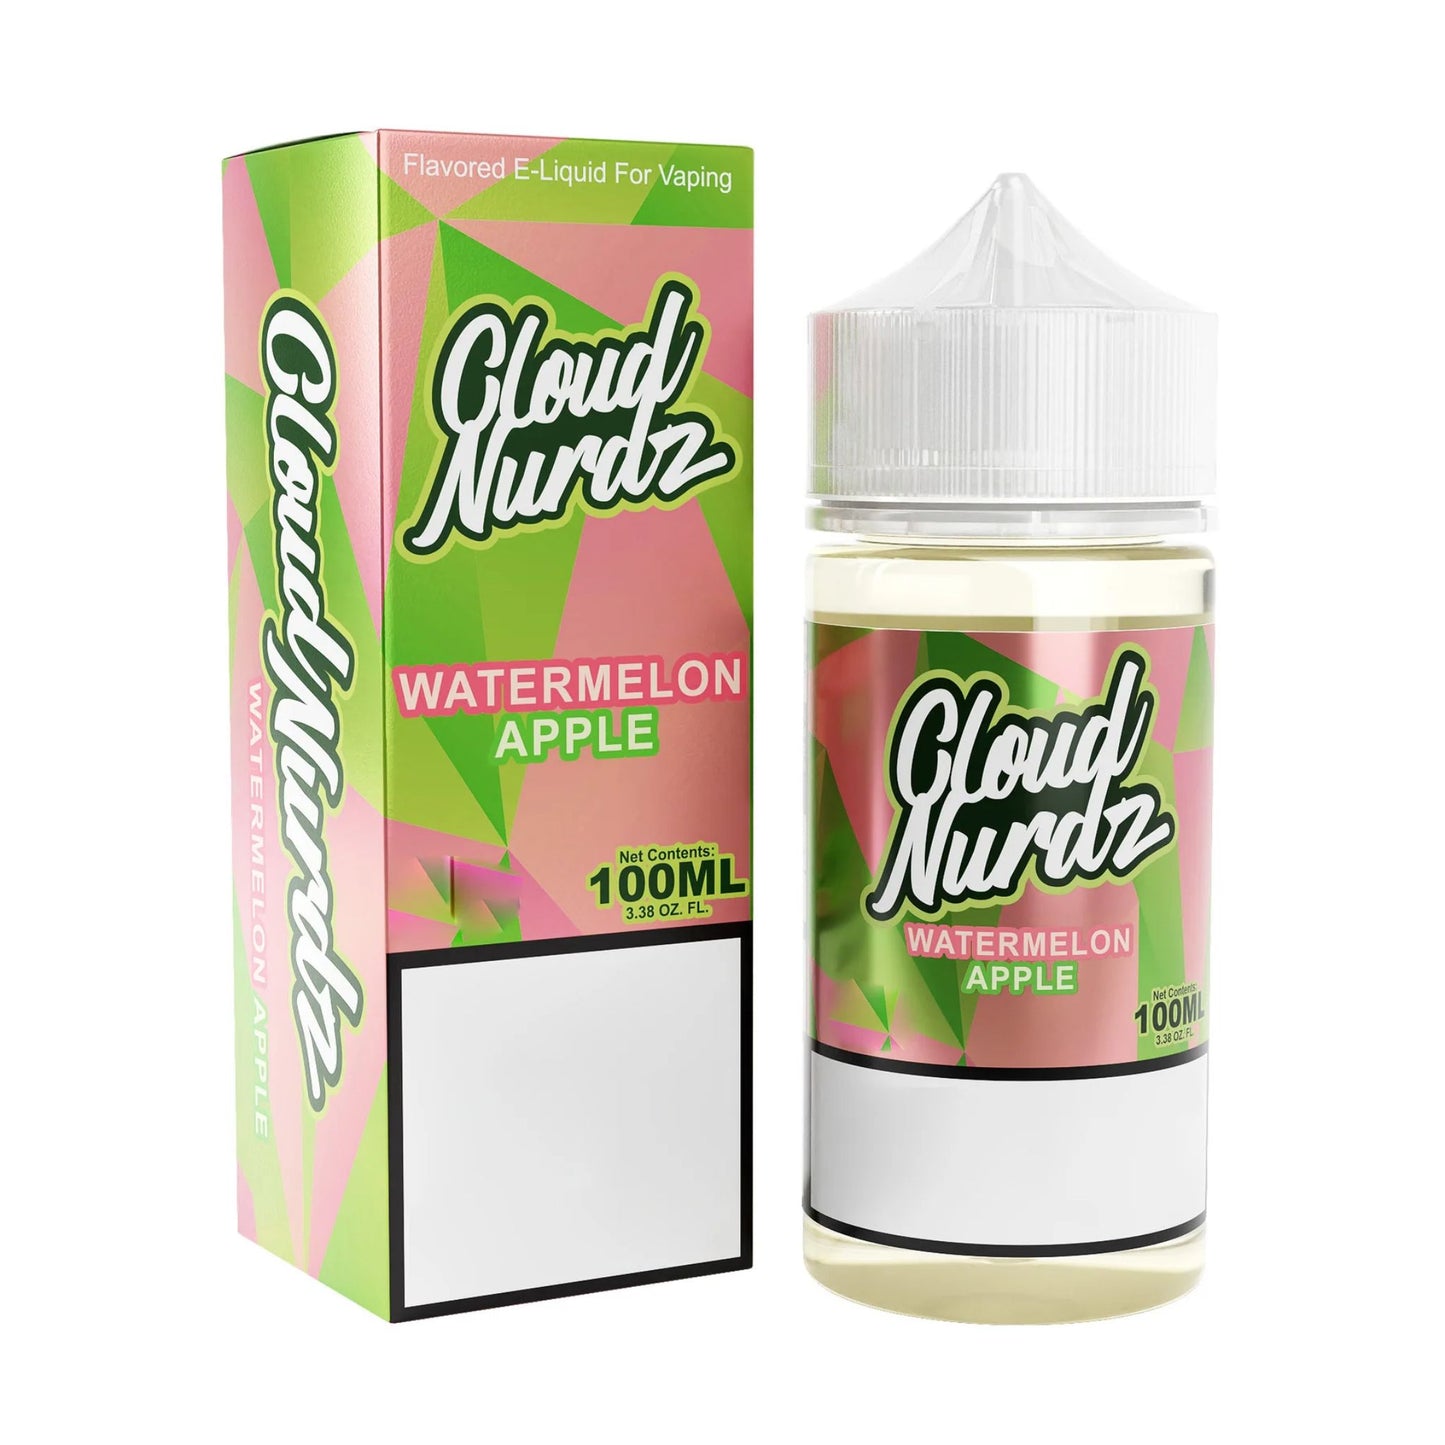 Cloud Nurdz | Watermelon Apple | 100ml bottle and box